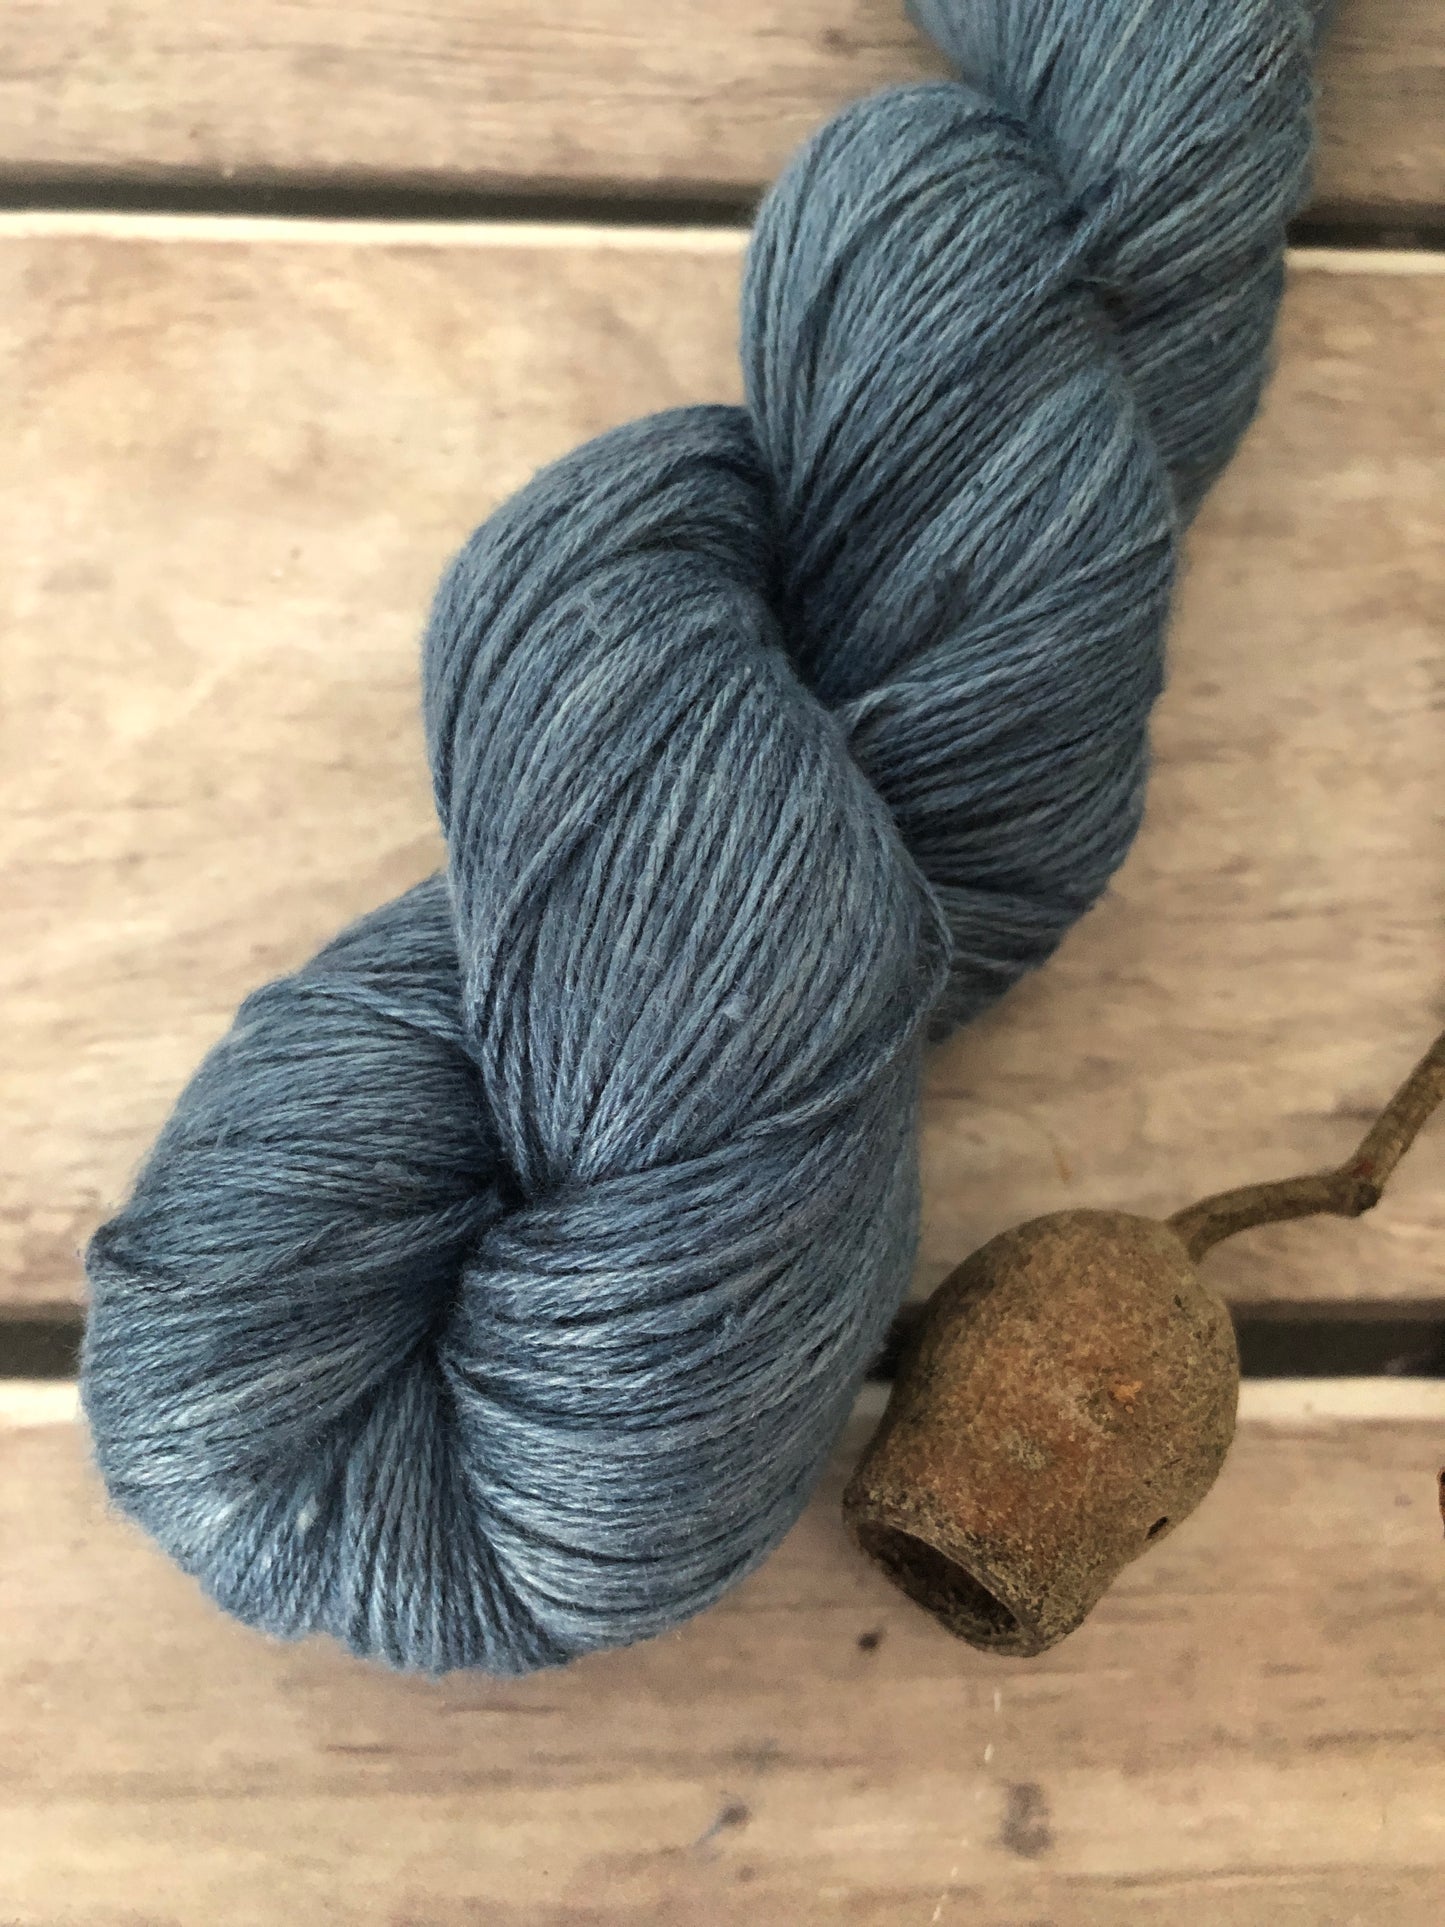 Nauriyu on Linden - 4 ply silk and linen yarn